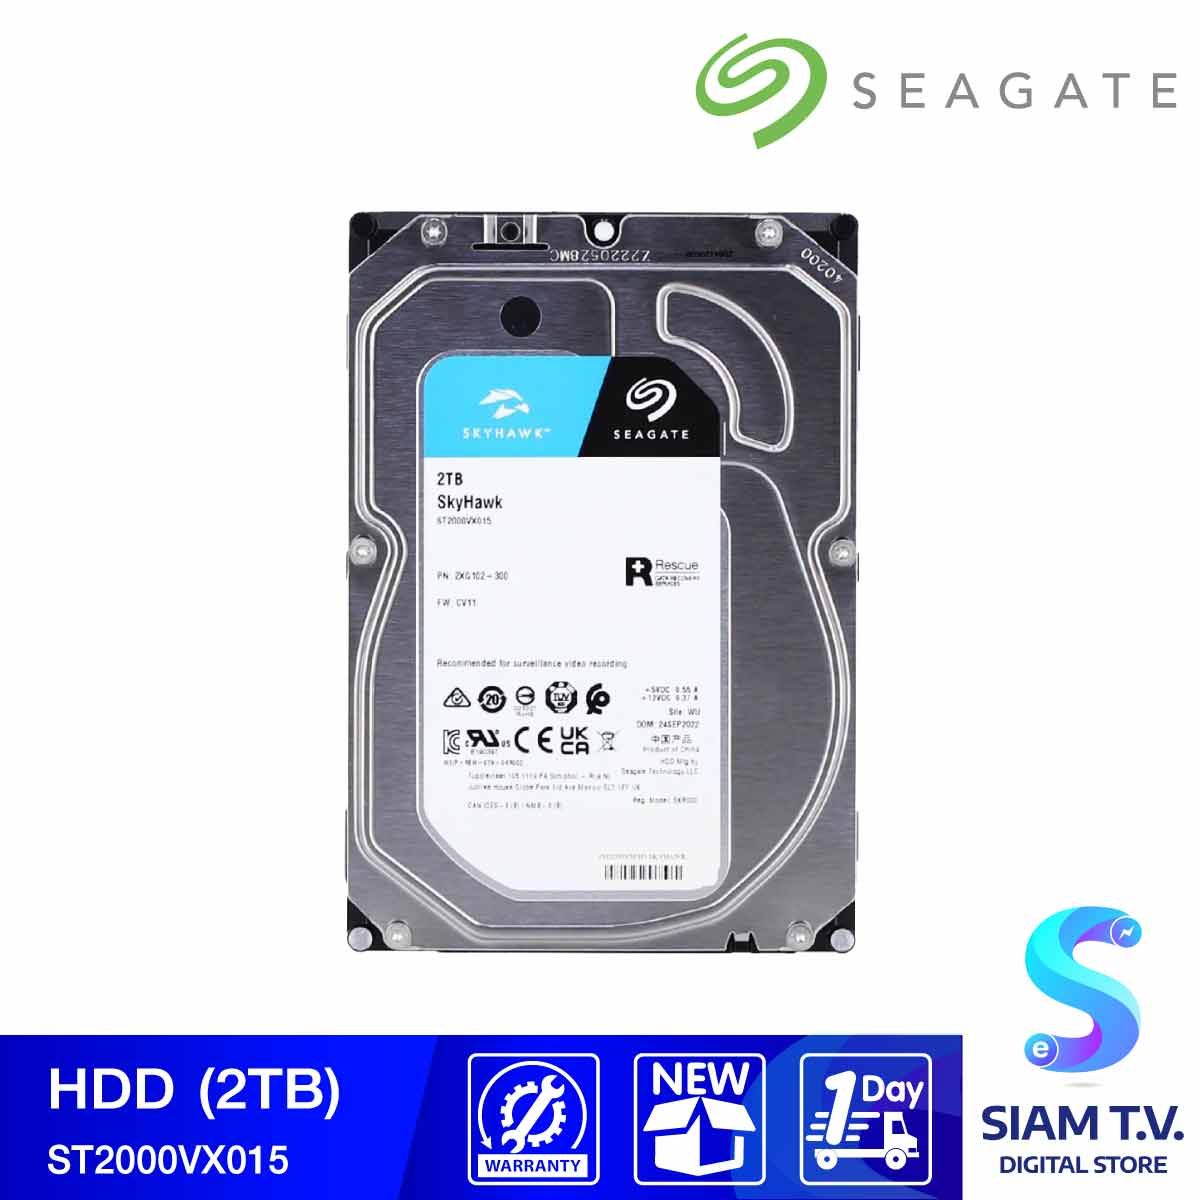 2 TB 3.5" HDD (ฮาร์ดดิสก์ 3.5") SEAGATE SKYHAWK - SATA3 (ST2000VX015)